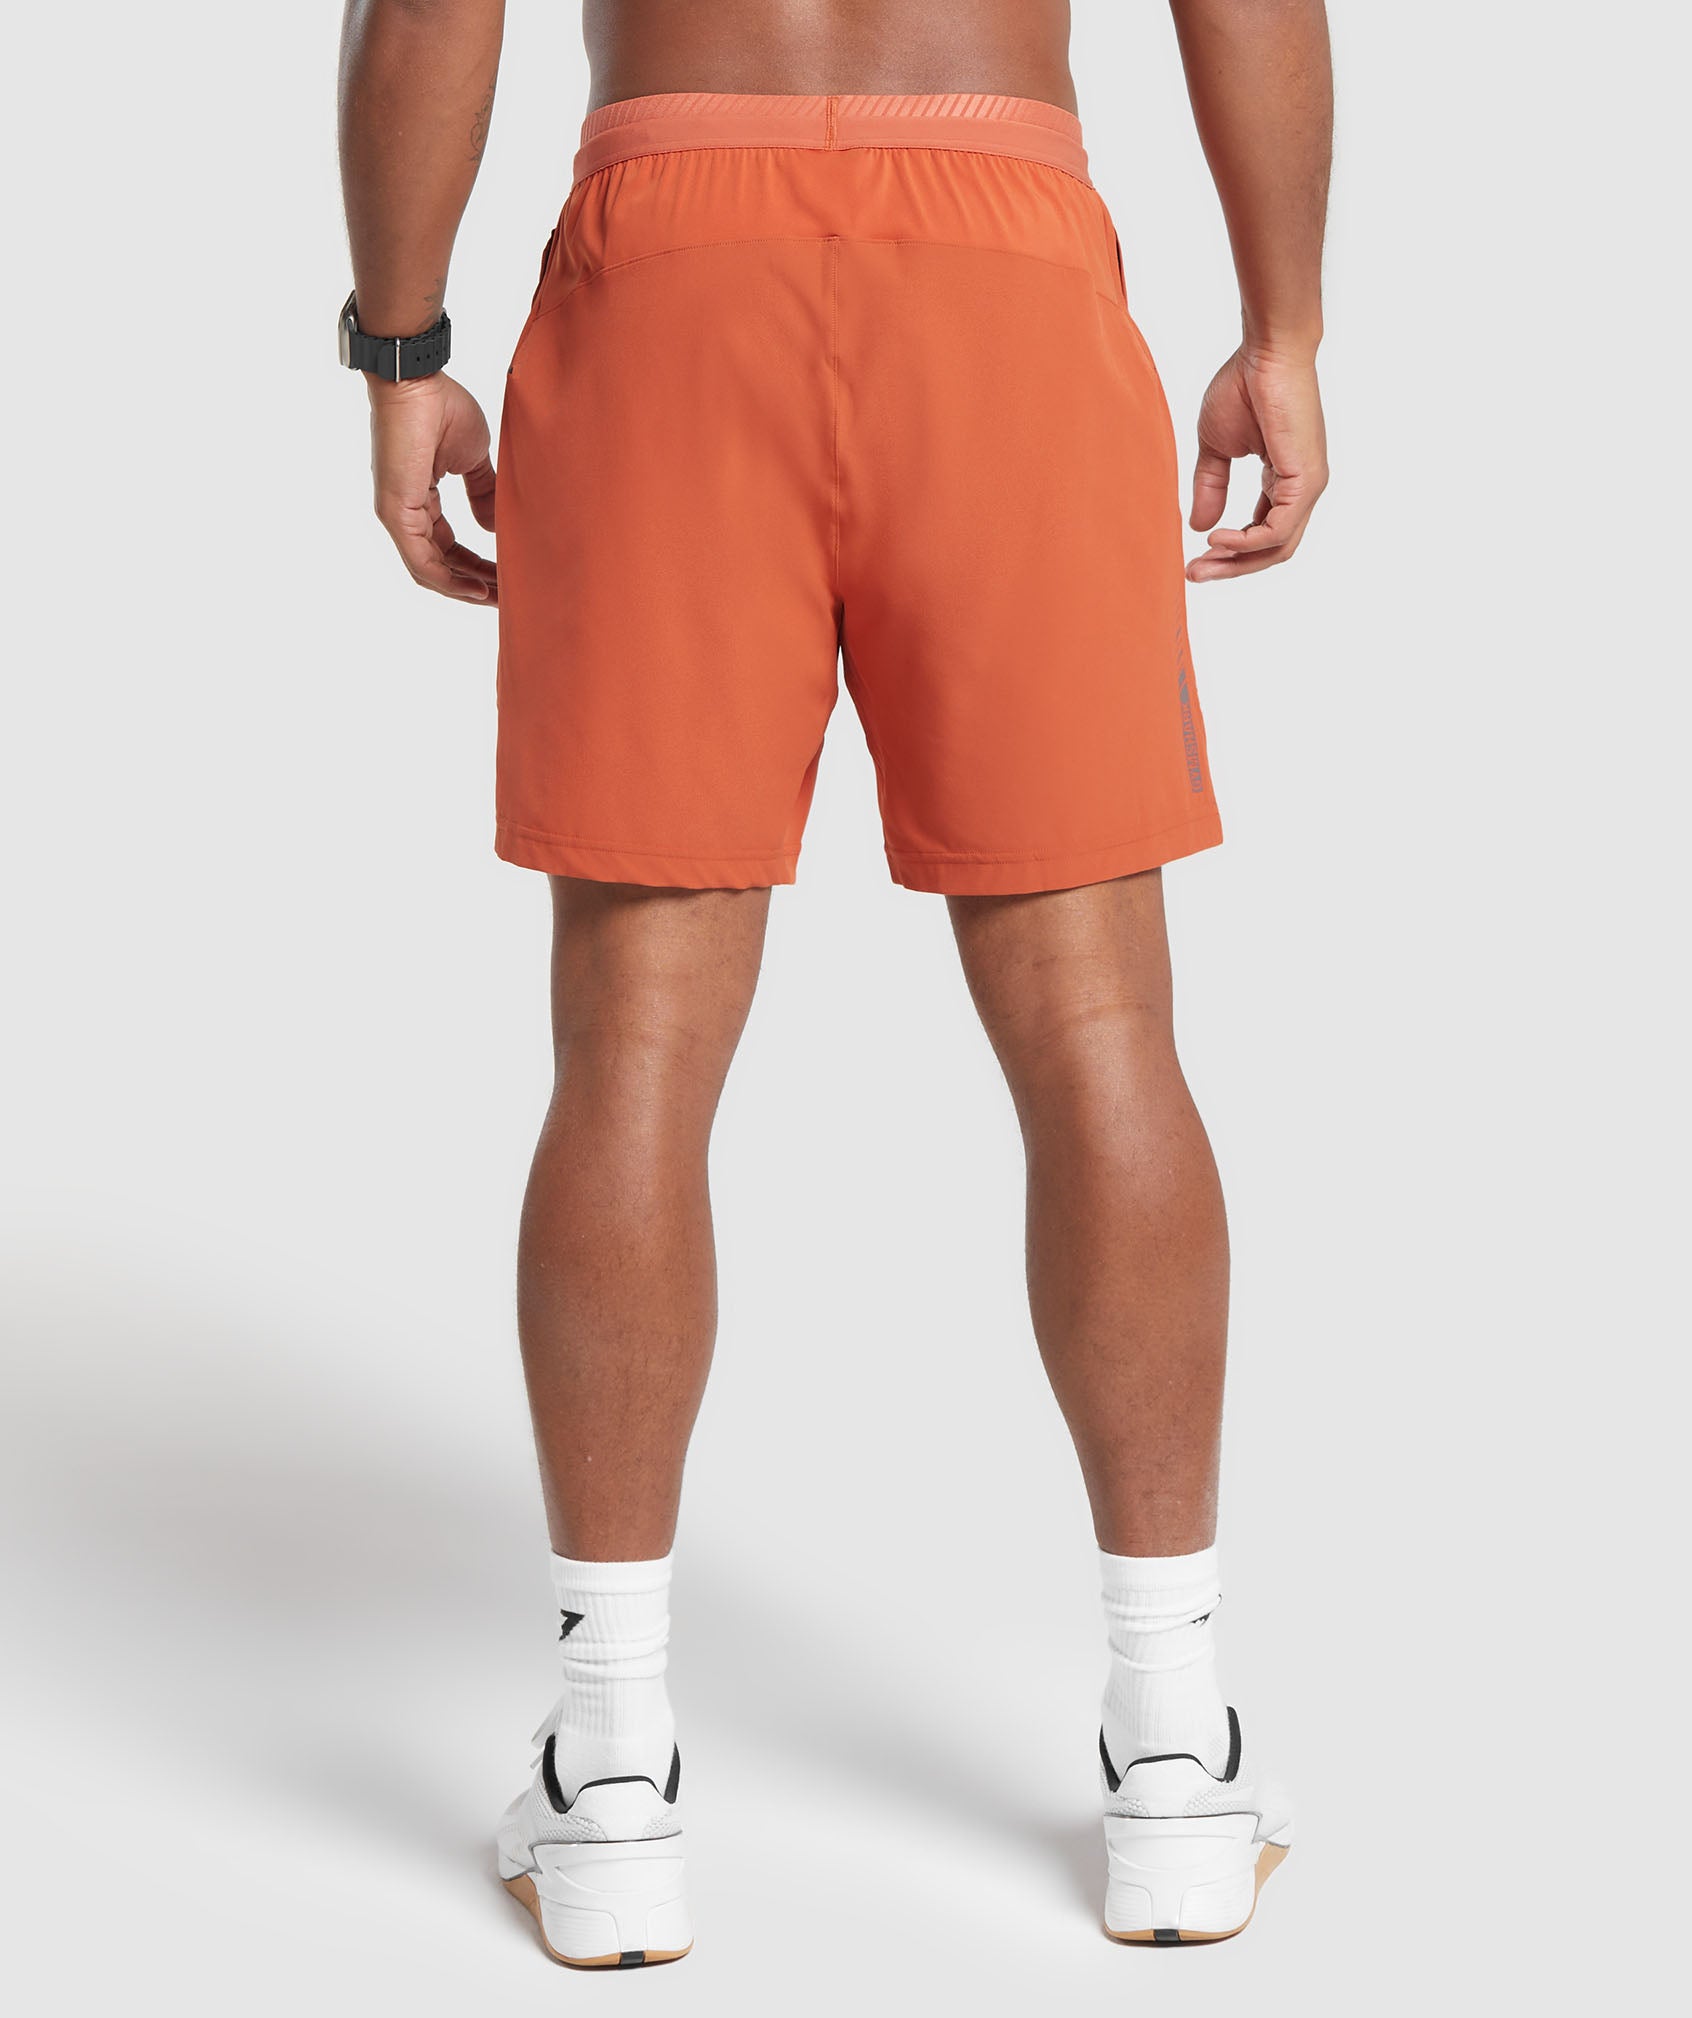 Apex 7" Hybrid Shorts in Rust Orange - view 2